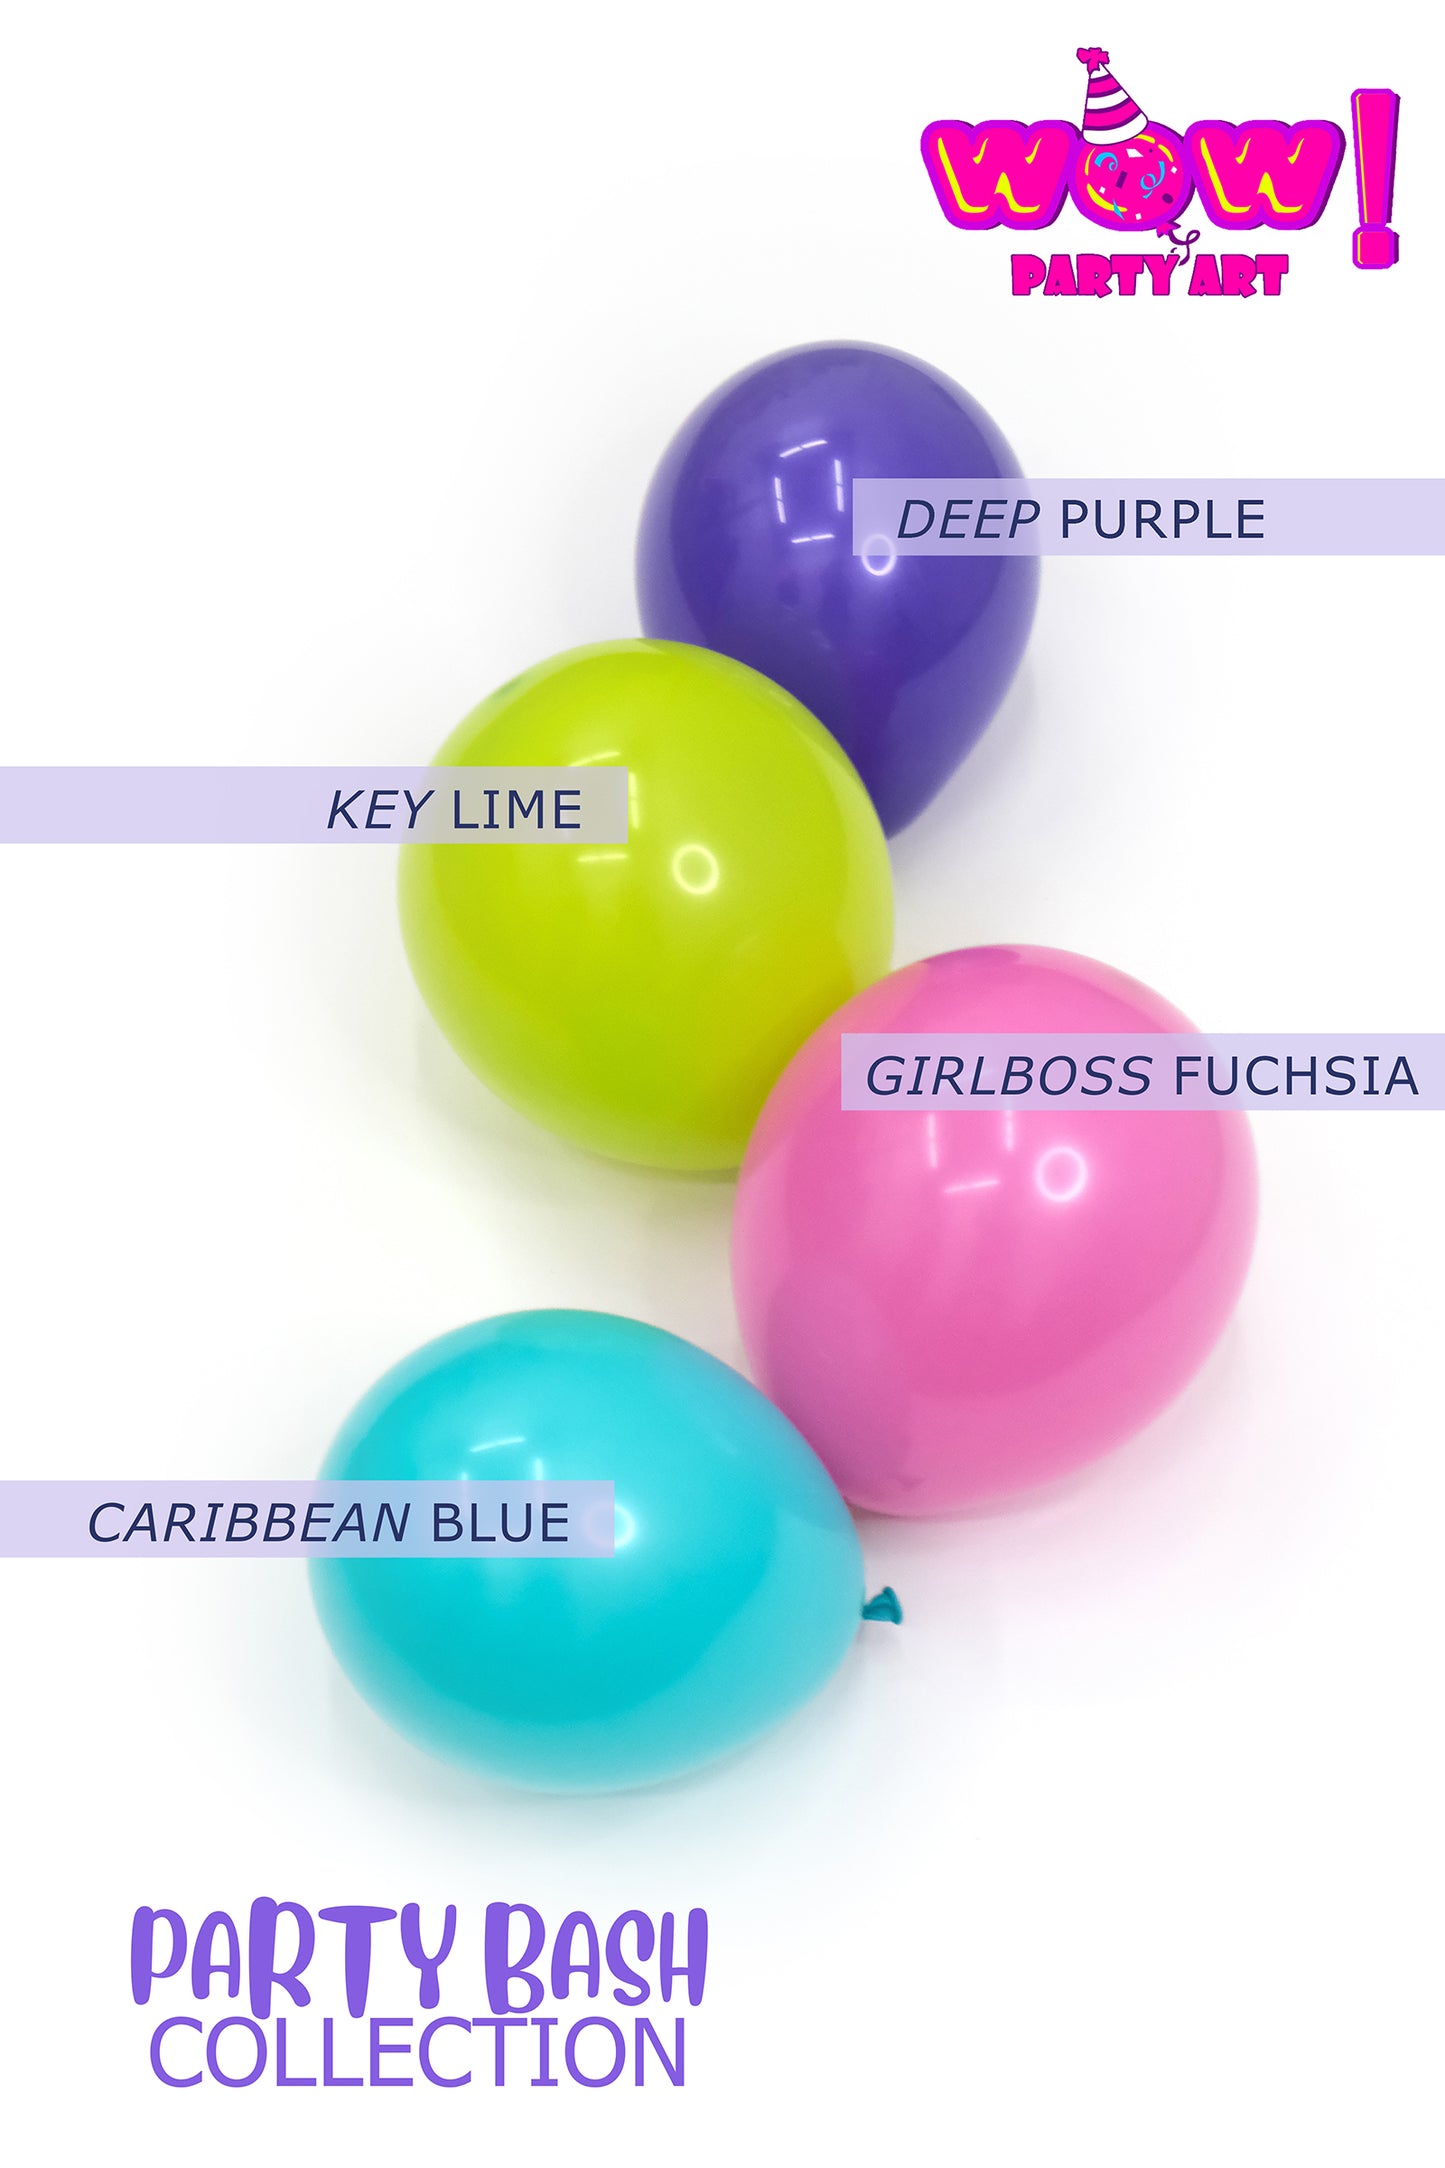 Good Vibes DIY Balloon Arch Garland Kit | Hot Pink Aqua Blue Purple Lime Green | Bright Rainbow Colorful Kids Birthday Party Balloon Decor